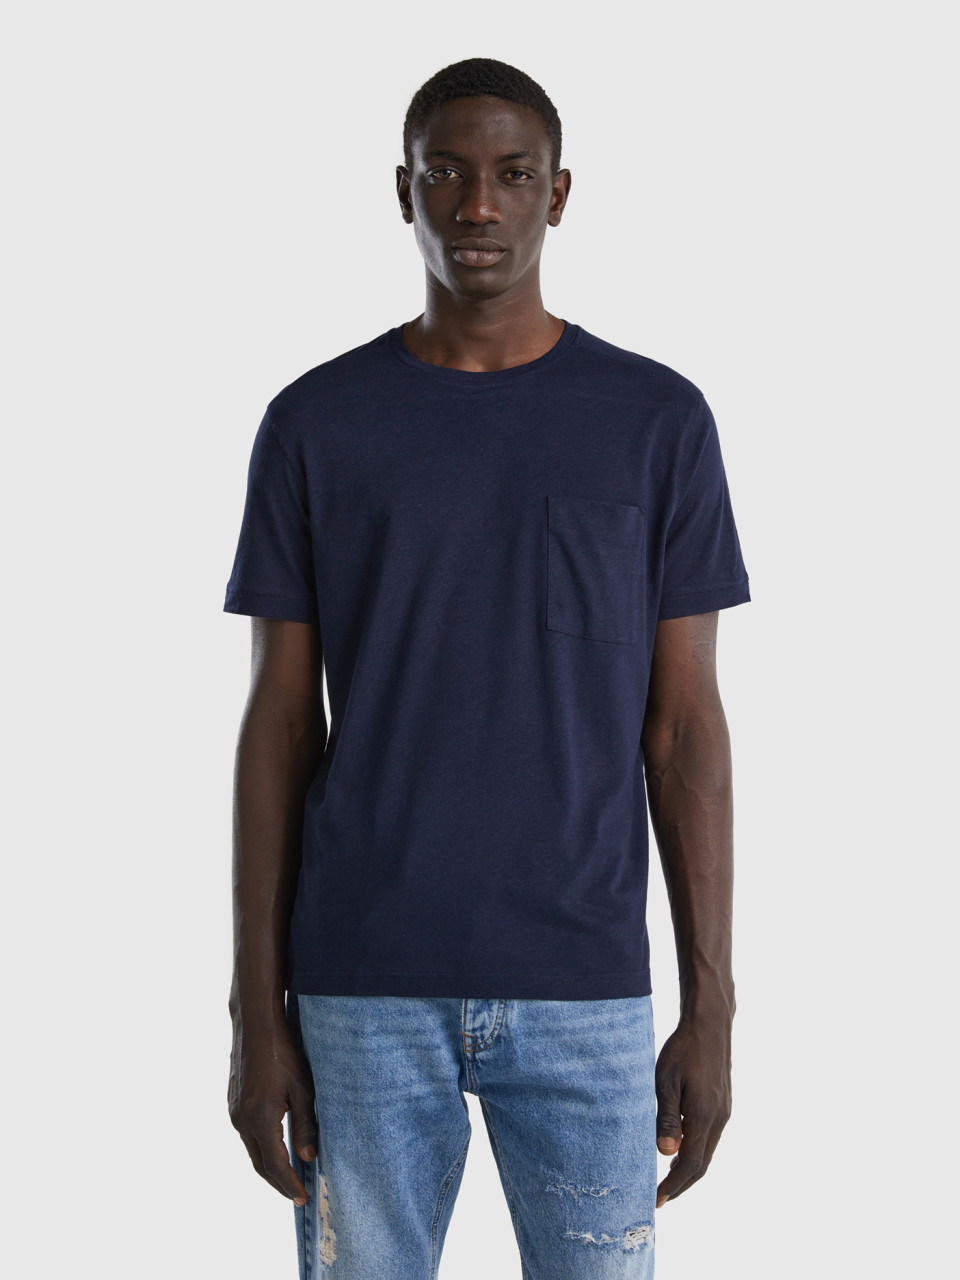 Benetton, T-shirt In Linen Blend With Pocket, Dark Blue, Men